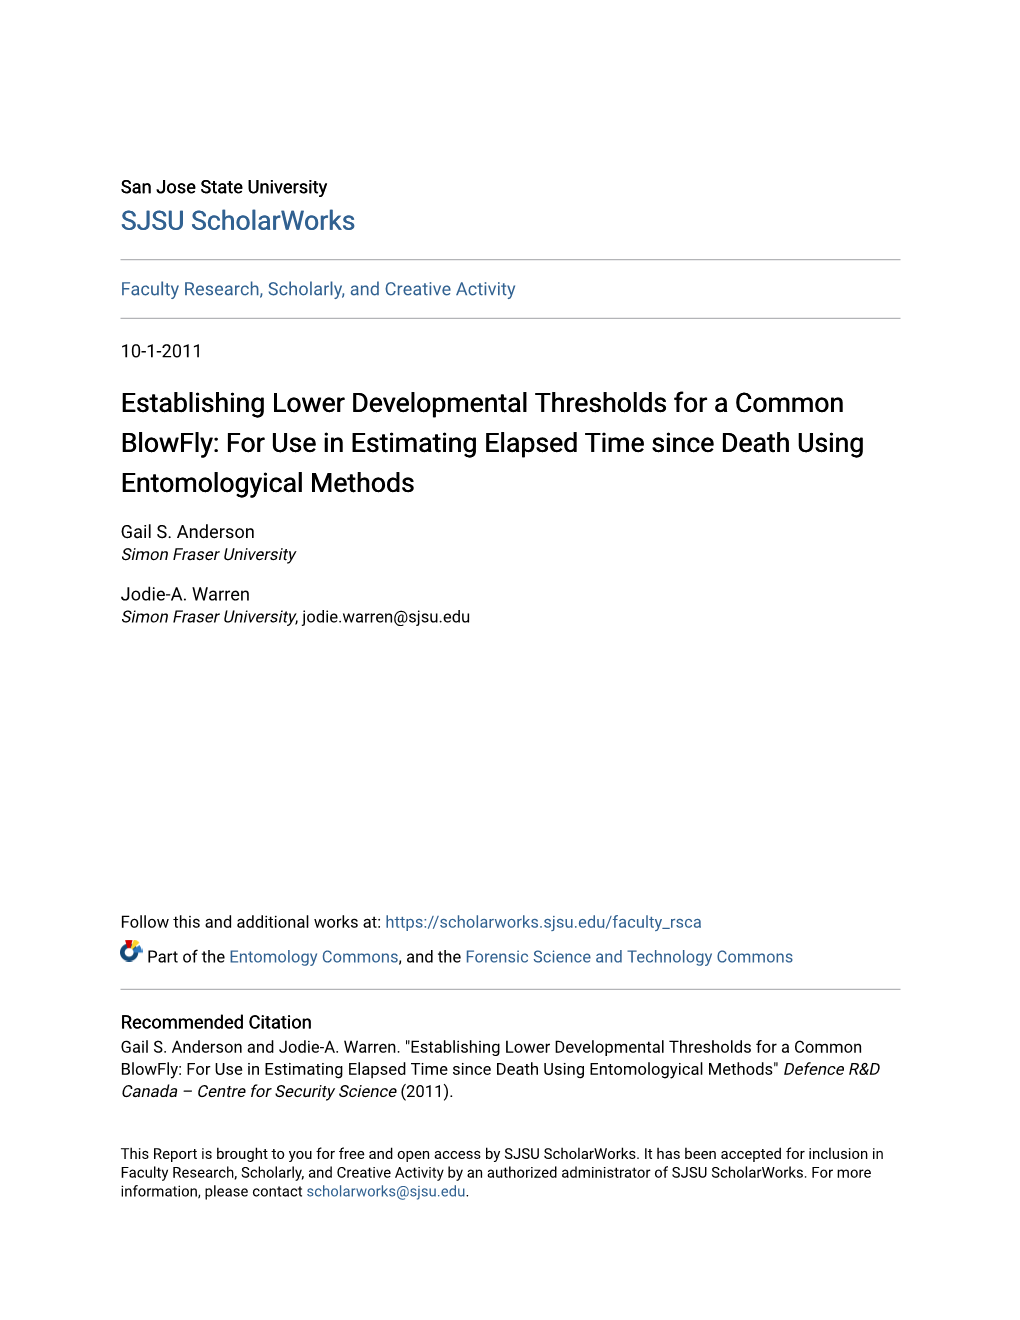 establishing-lower-developmental-thresholds-for-a-common-blowfly-for-use-in-estimating-elapsed